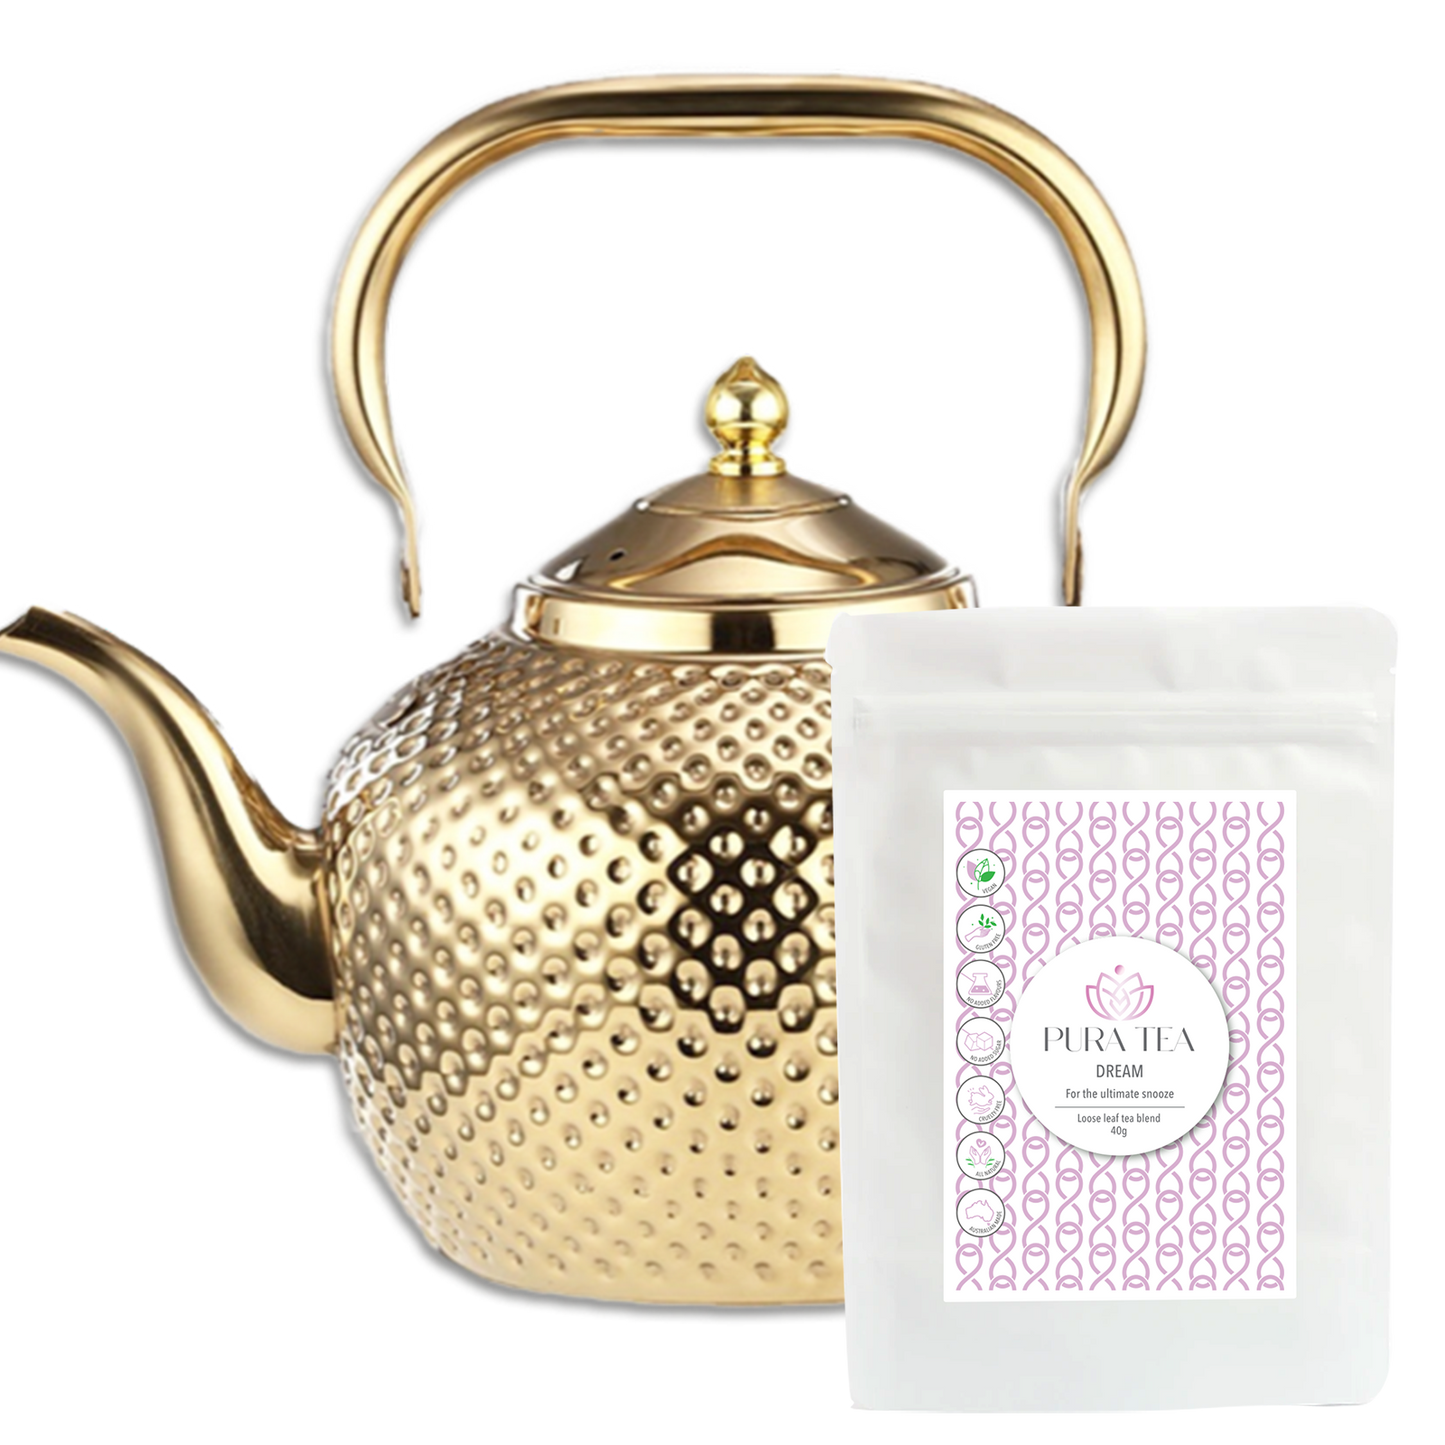 Gift Set - Teapot with Dream Blend Tea